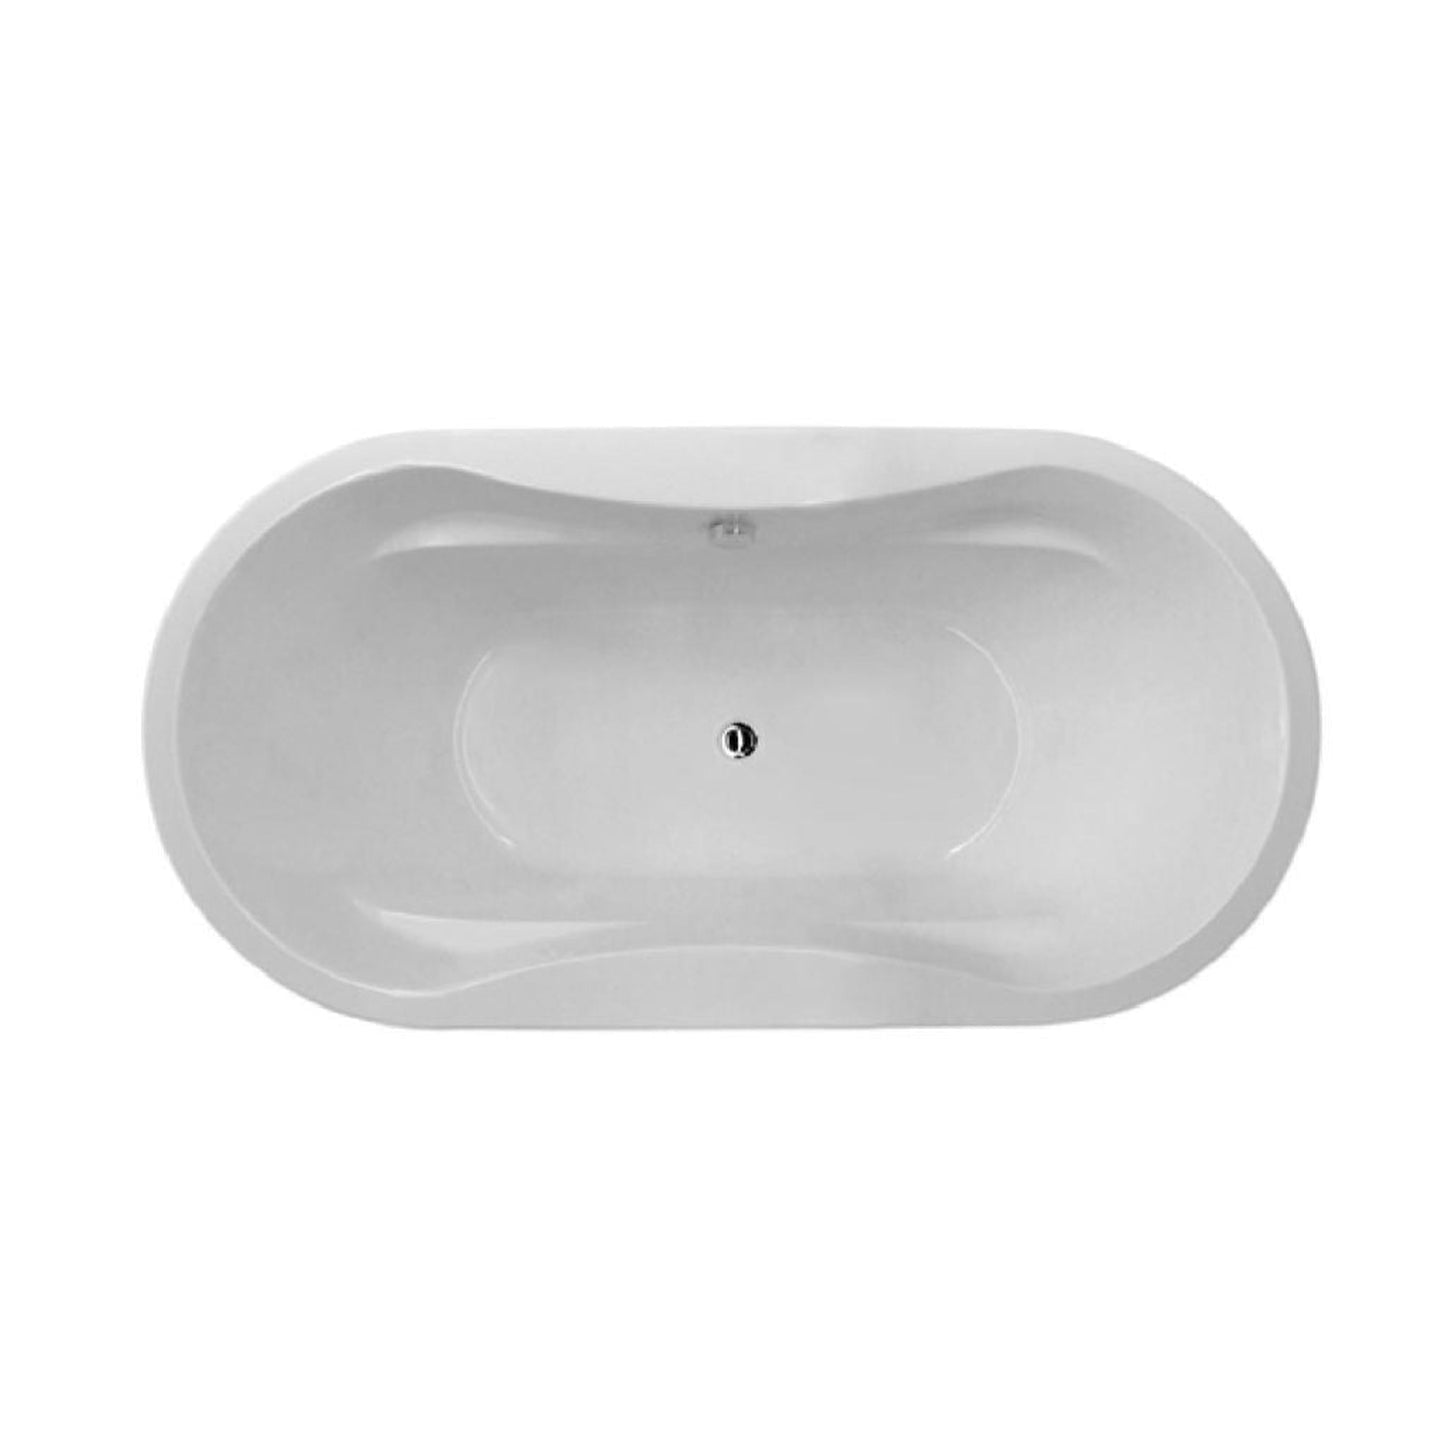 Atlantis Whirlpools Embrace 34" x 71" White Oval Freestanding Acrylic Air Bath Tub